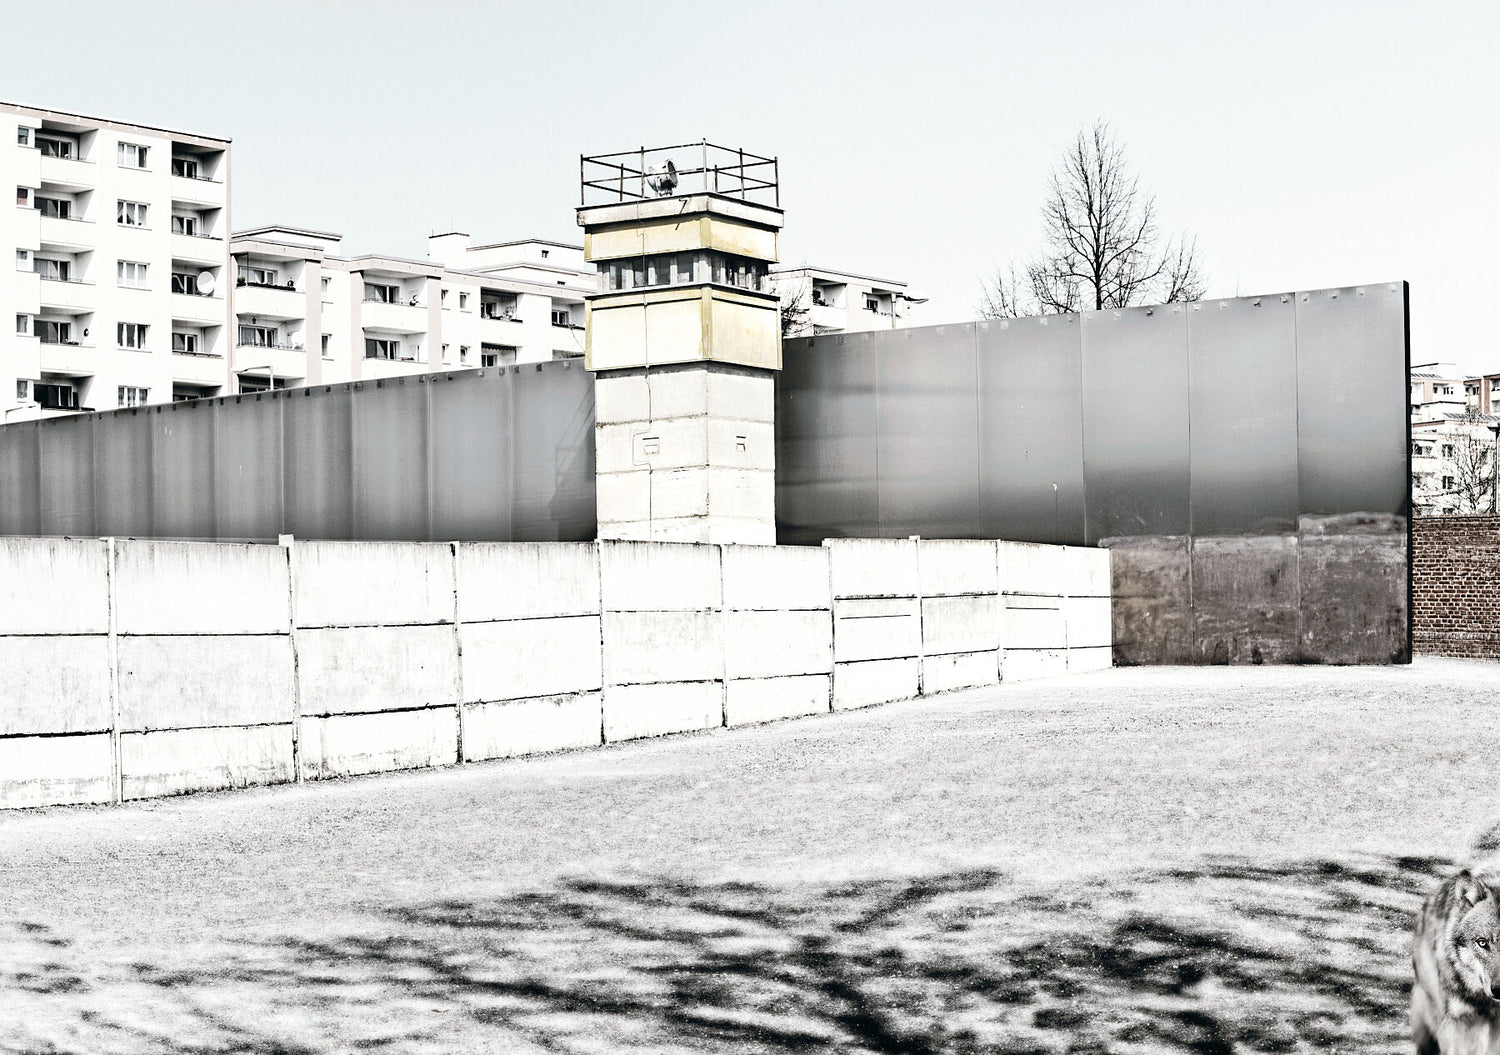 Resurgence – Berlin Wall Memorial Grounds – Project OFFSIDE – Memory 3 - Kohlhoff und Kohlhoff architects  - Print metallic Limited edition 1-30 -C-type Fudji Gloss